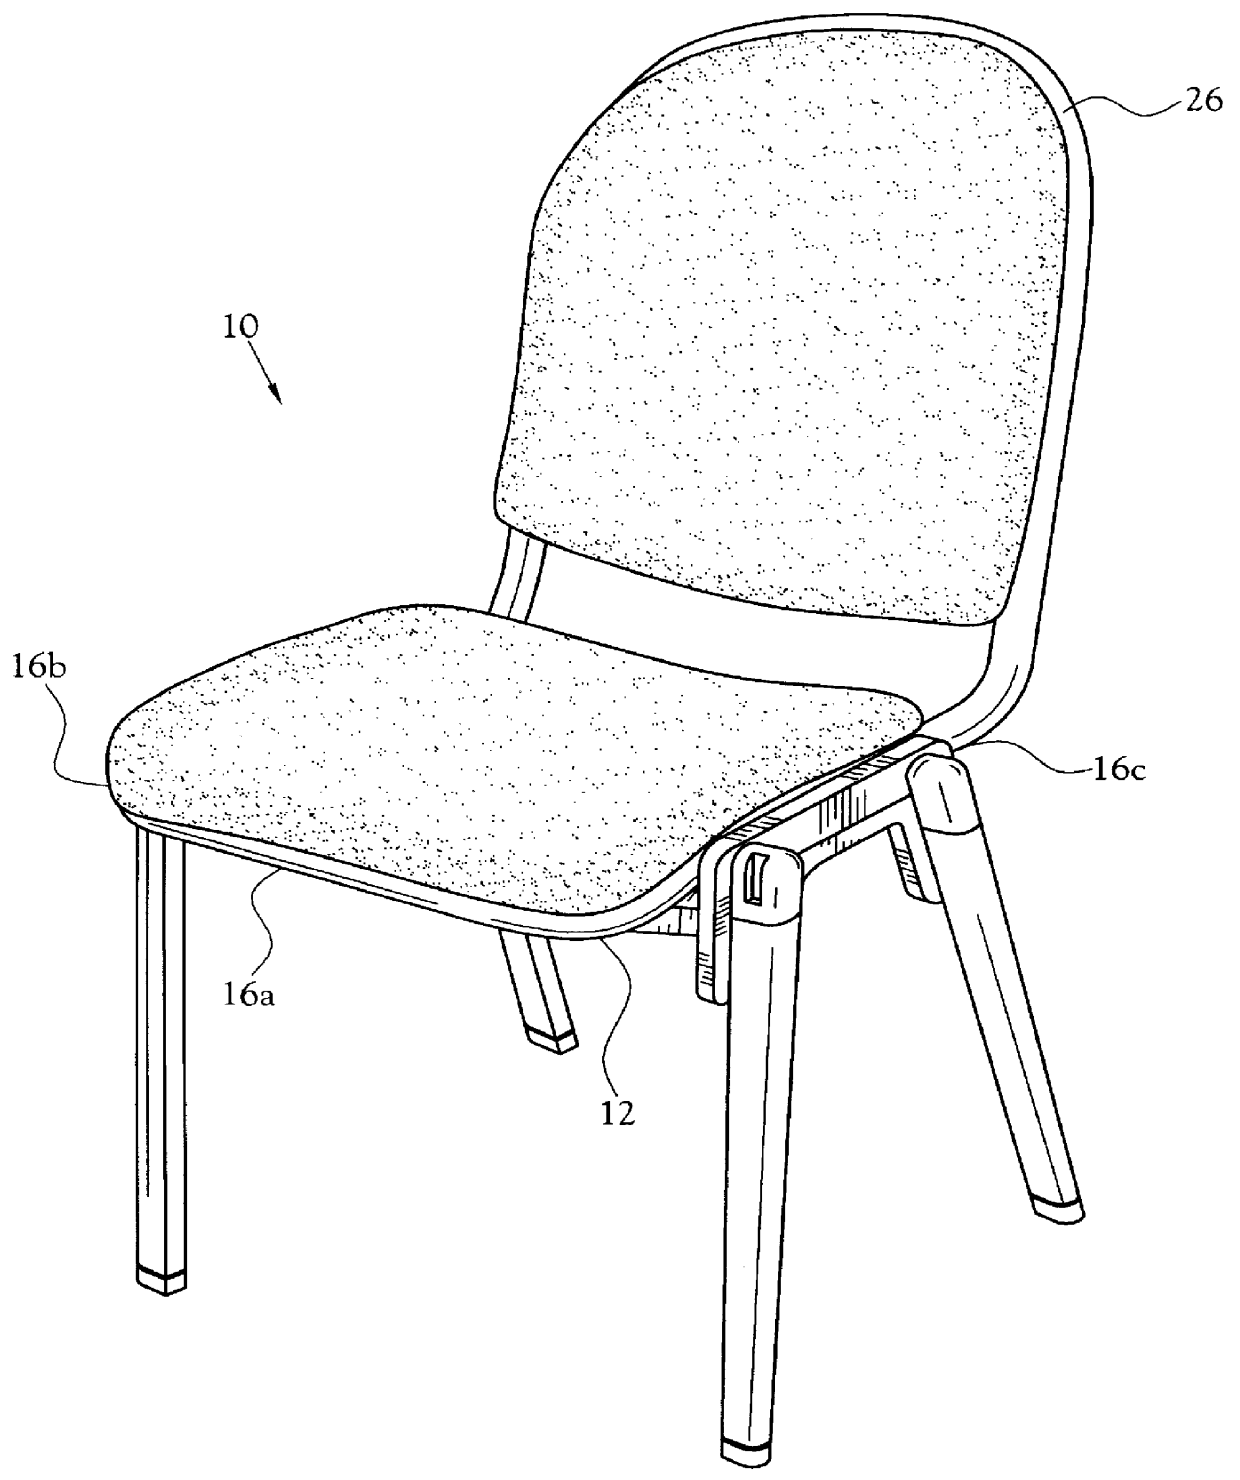 Stackable leg-over-leg ganging chair